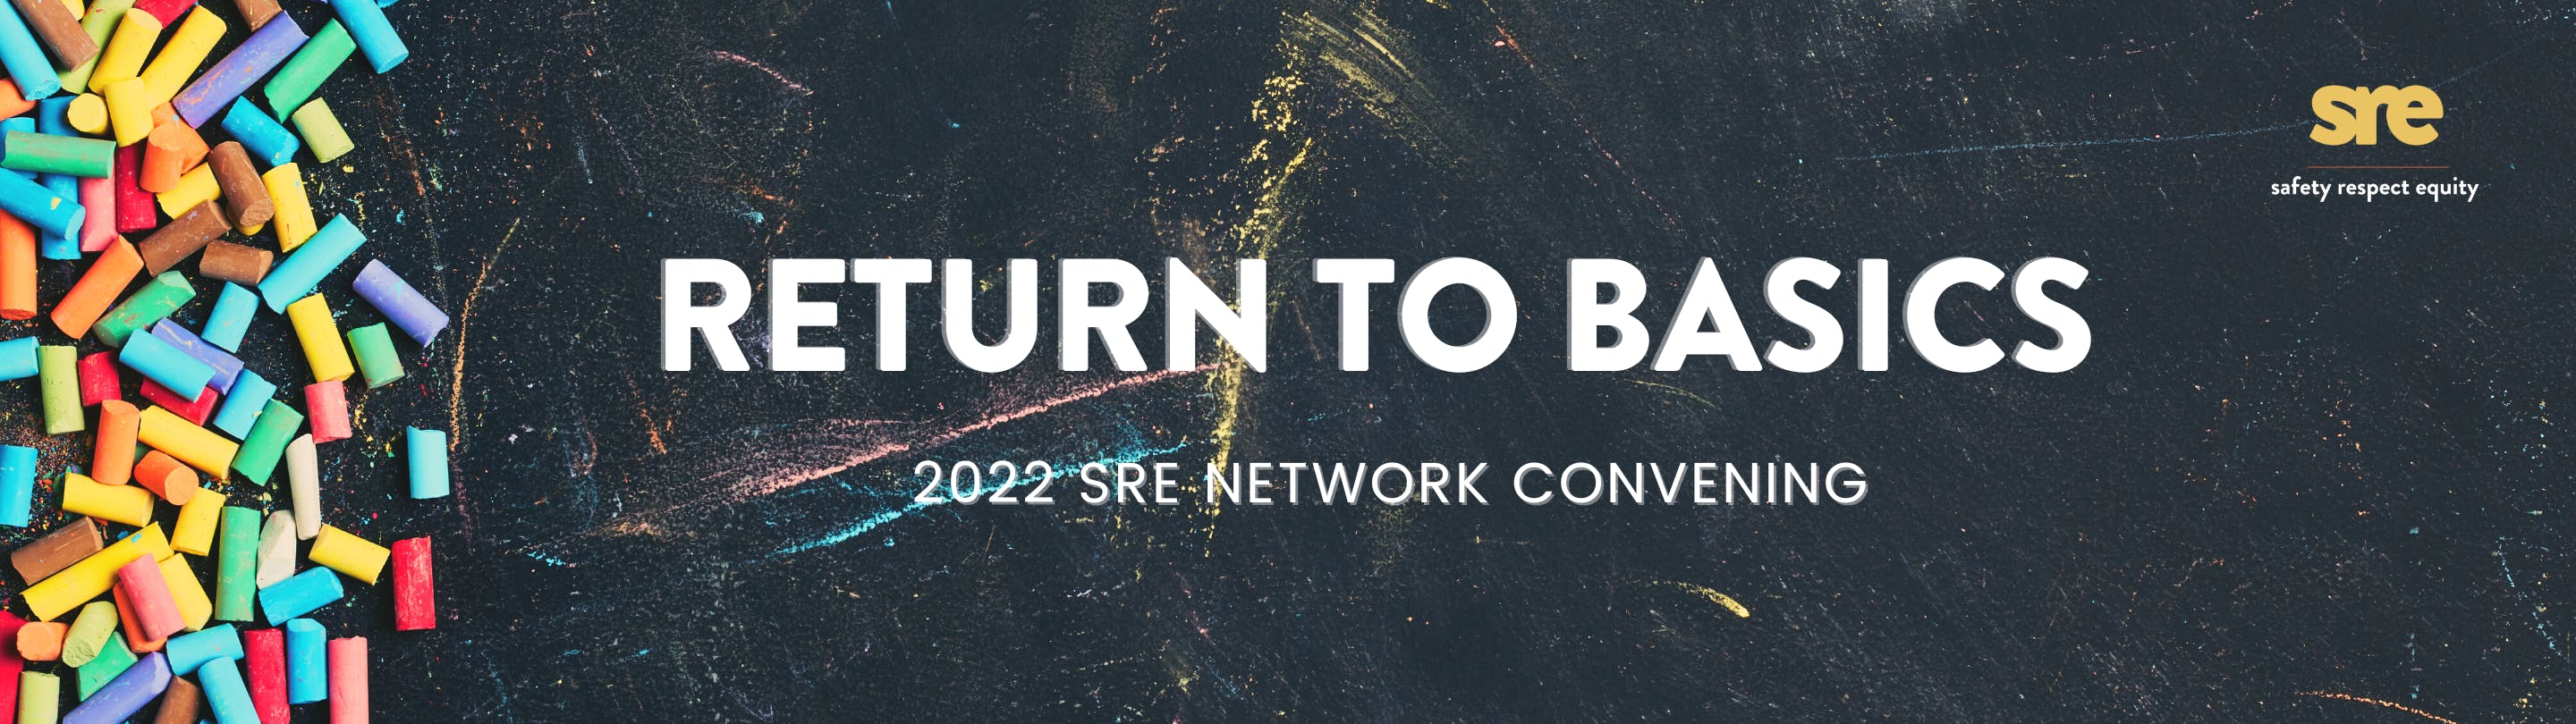 Return to Basics: 2022 SRE Network Convening